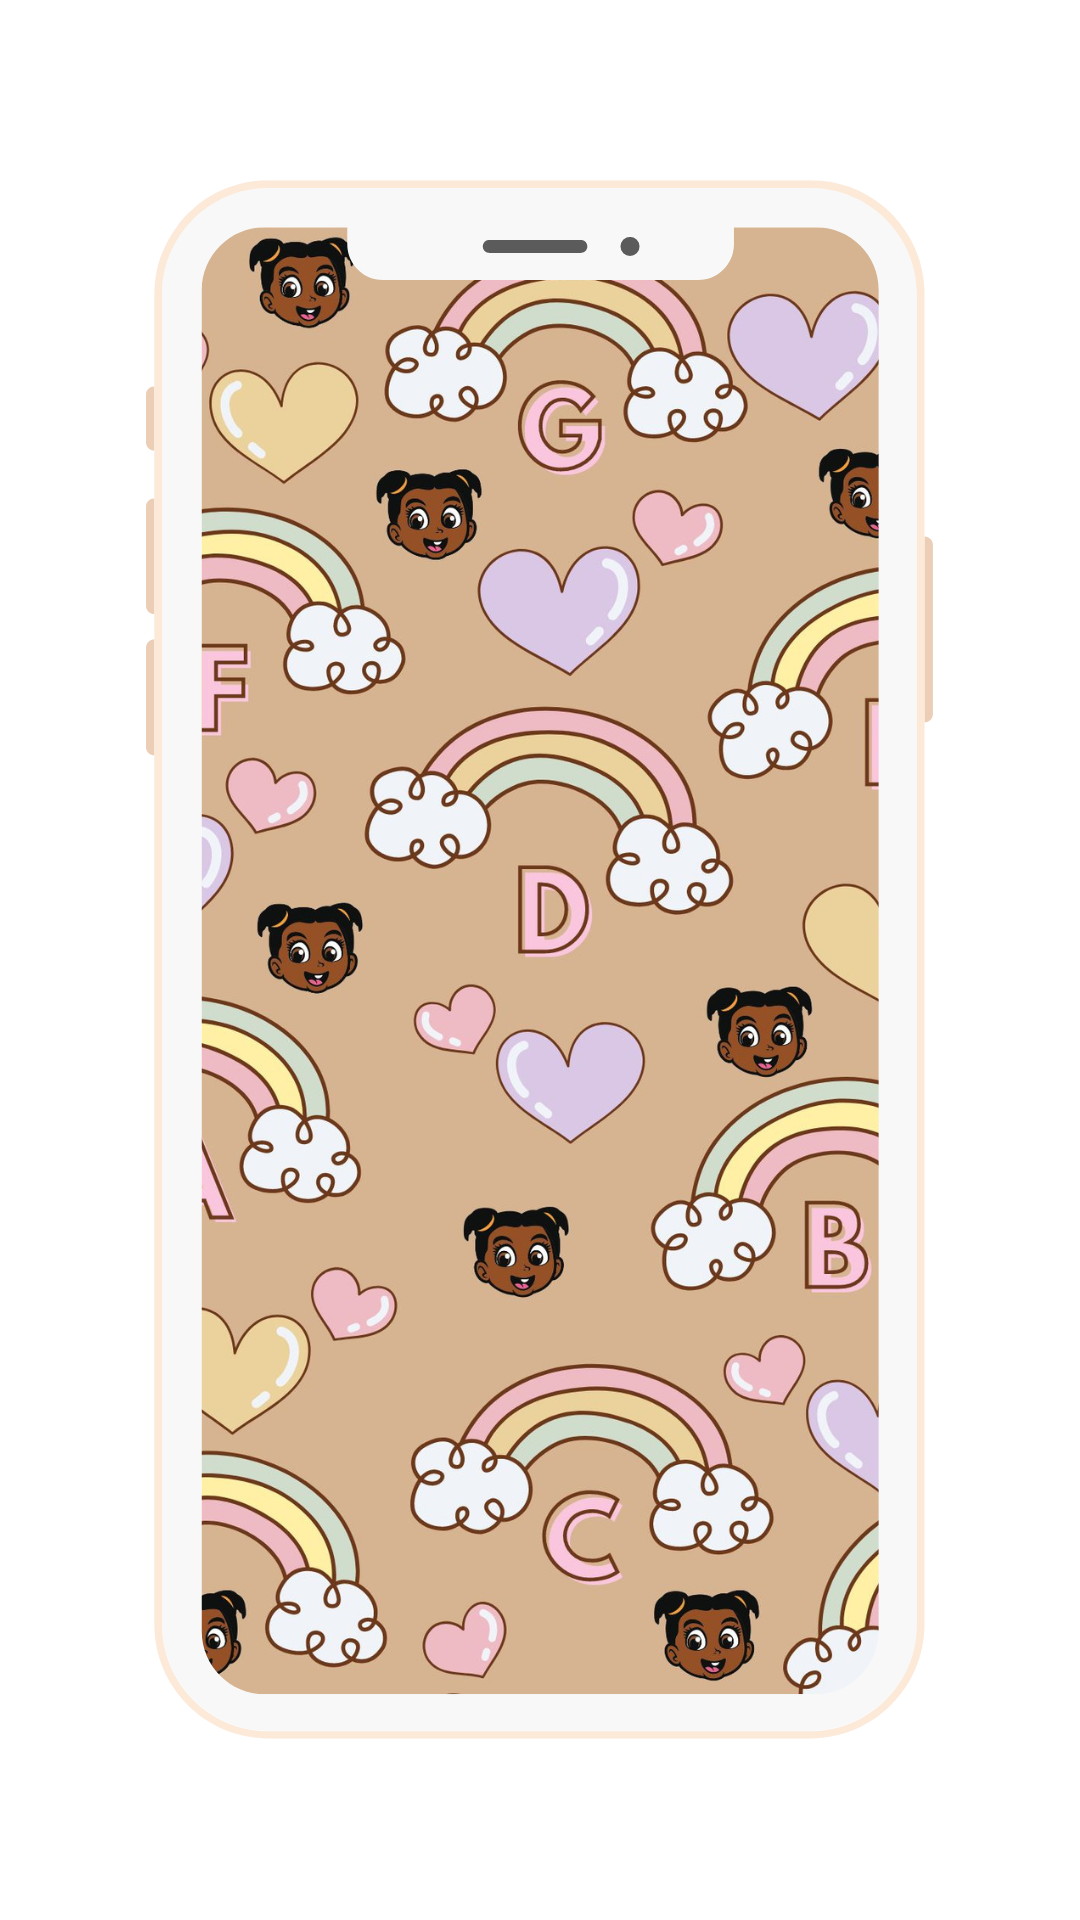 Prinny Pie Phone Wallpaper | Prinny Pie Wallpaper | Digital Download | IPhone wallpaper | Digital Phone Wallpaper